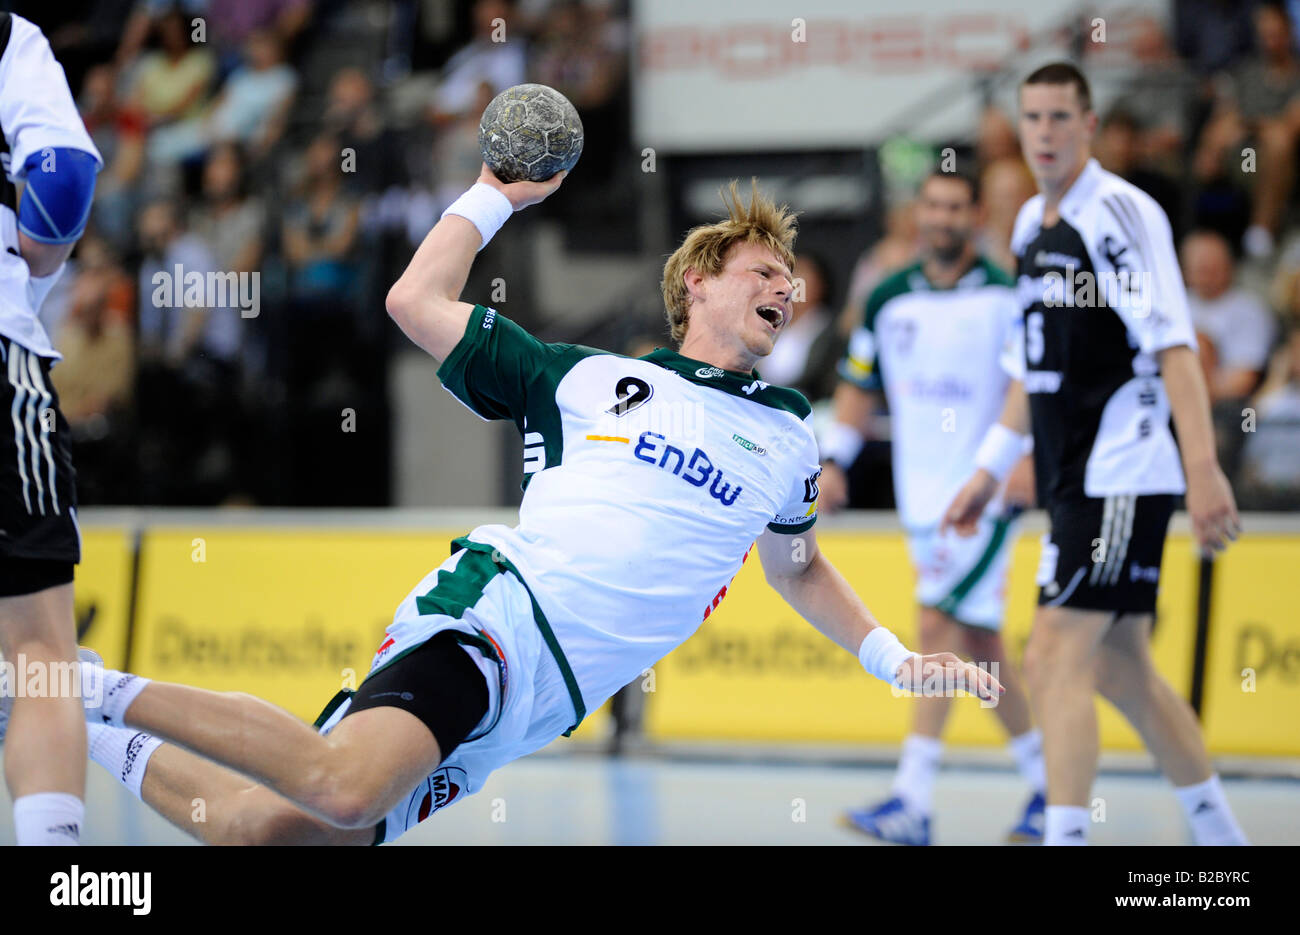 Handball, Manuel Spaeth, Frisch Auf! Goeppingen, throwing the ball Stock Photo